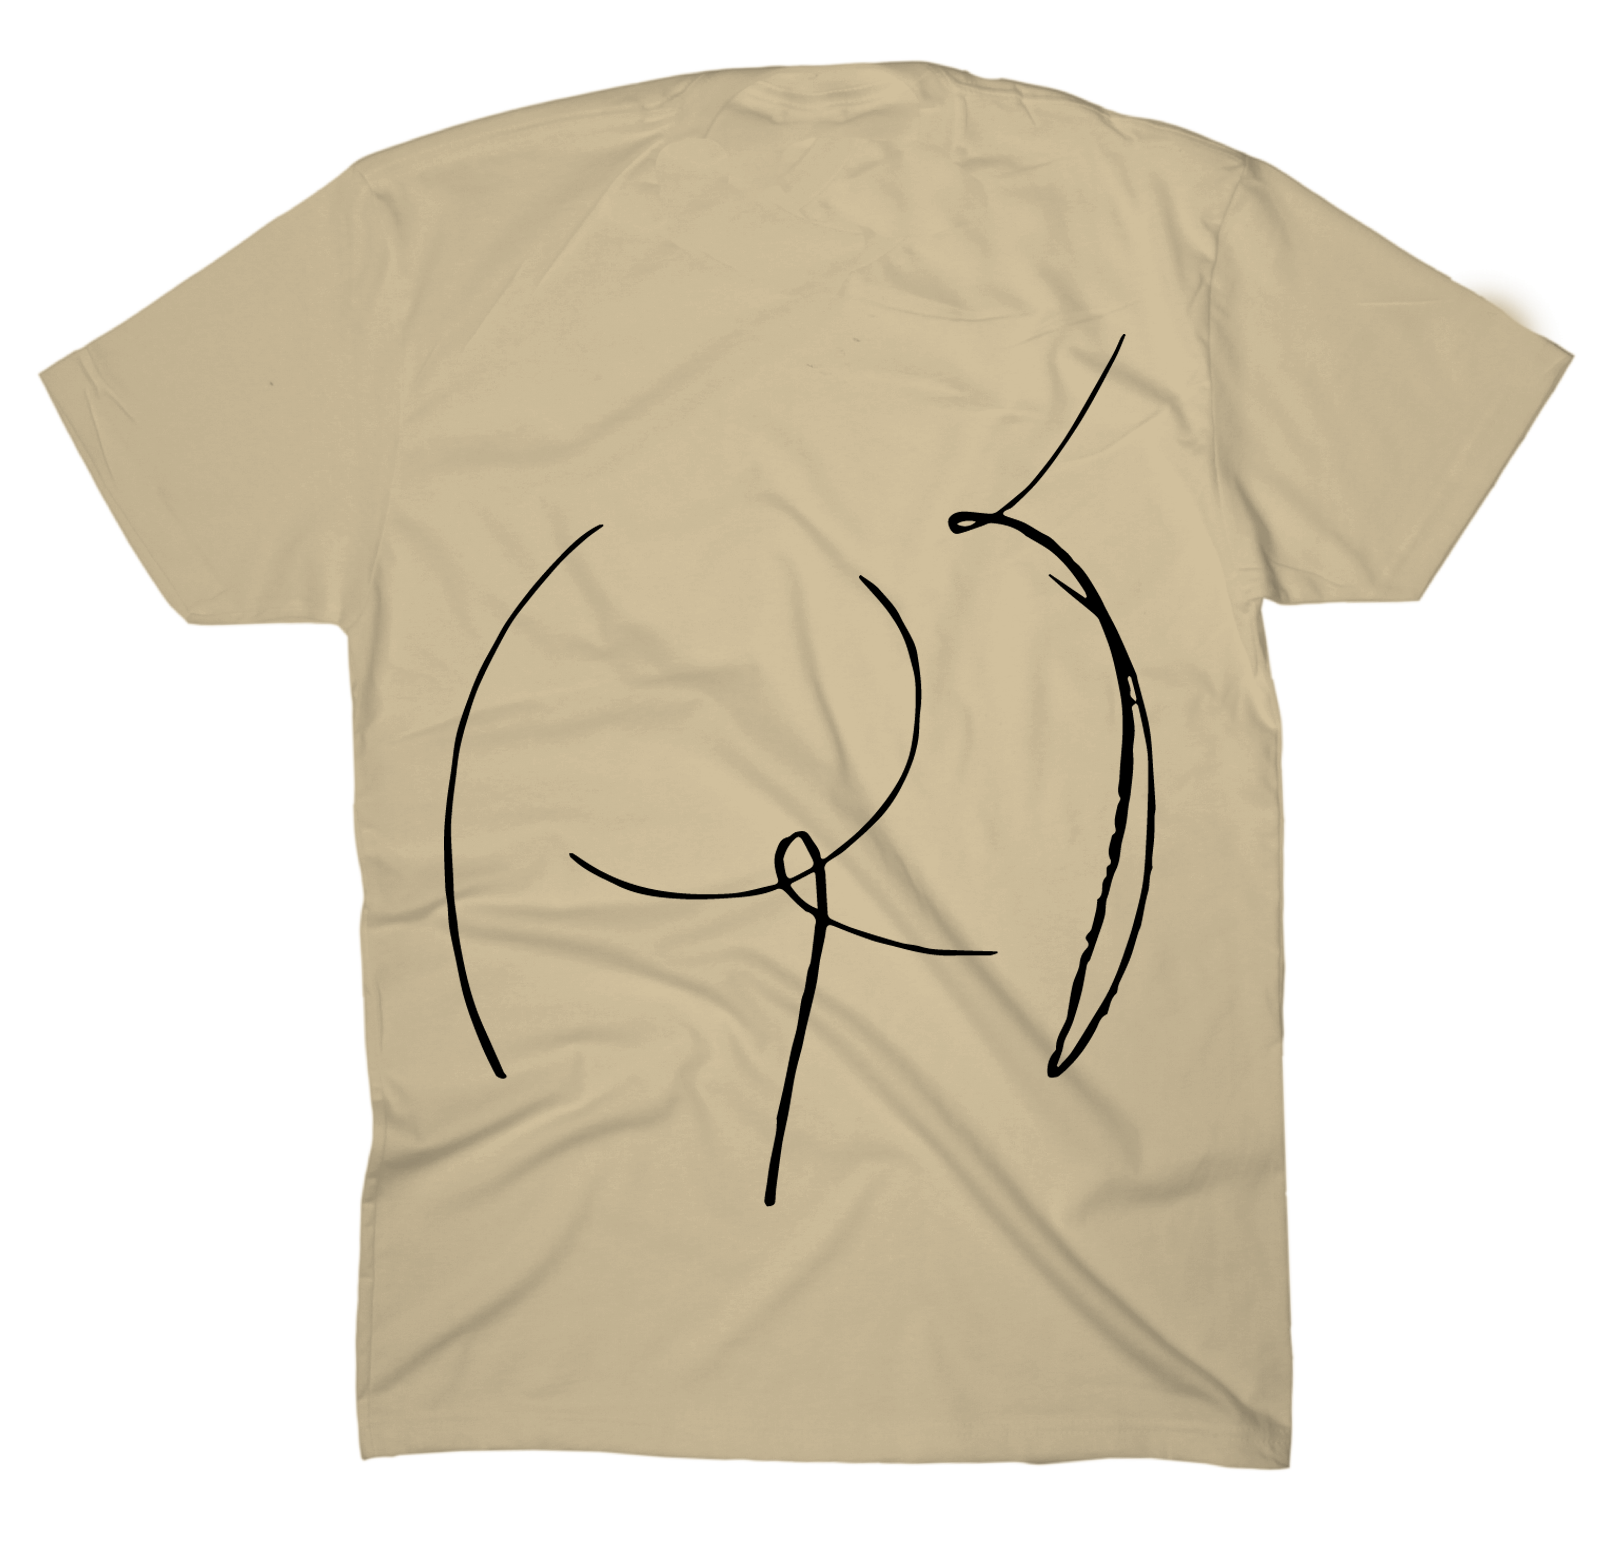 Send Nudes T-Shirt [Cream] - Signedbymcfly